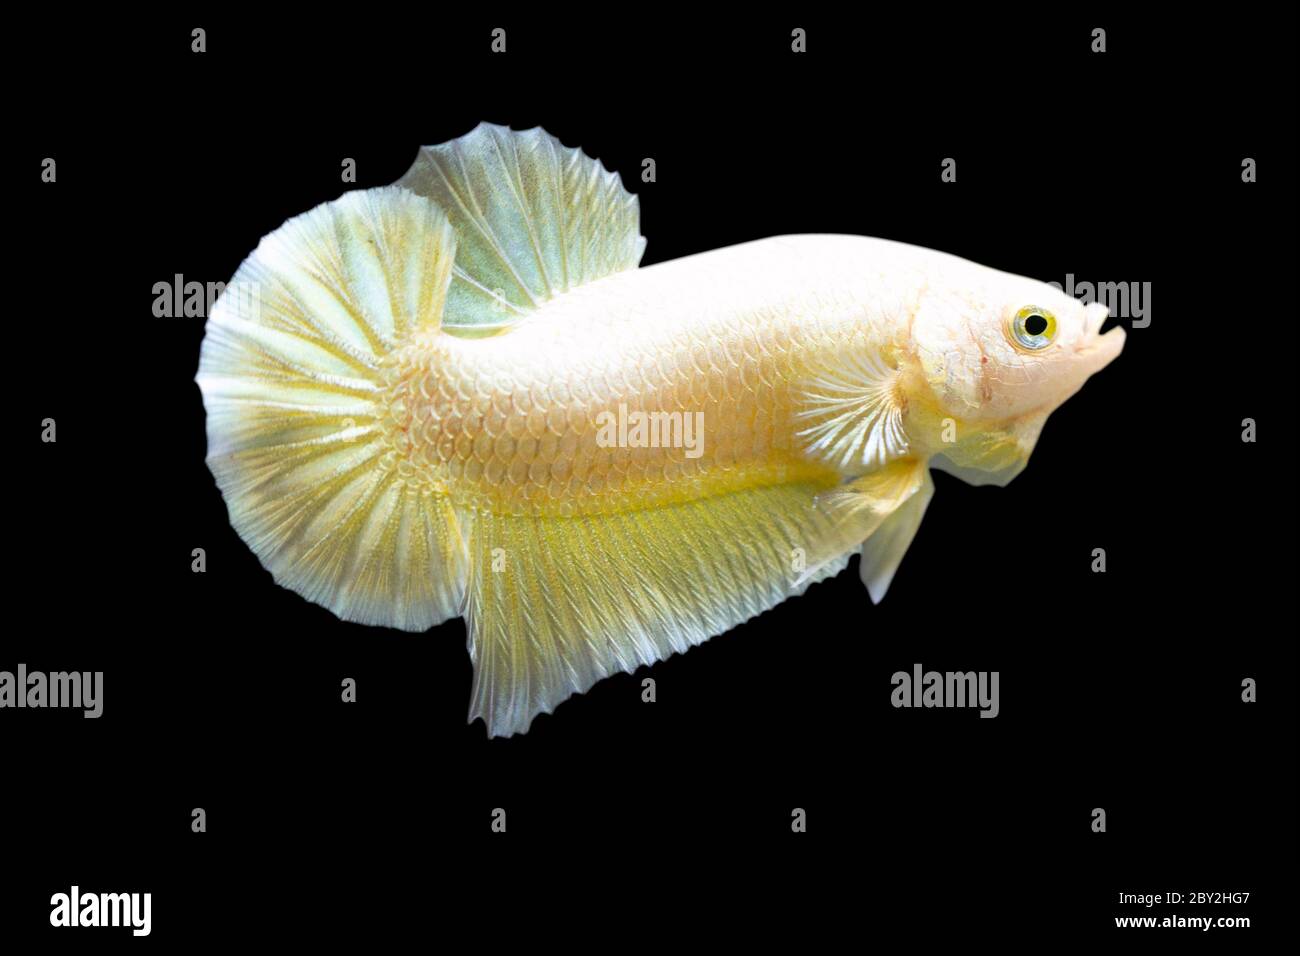 Betta Super Gold Halfmoon Plakat  HMPK Male or Plakat Fighting Fish Splendens  on Black Background Stock Photo